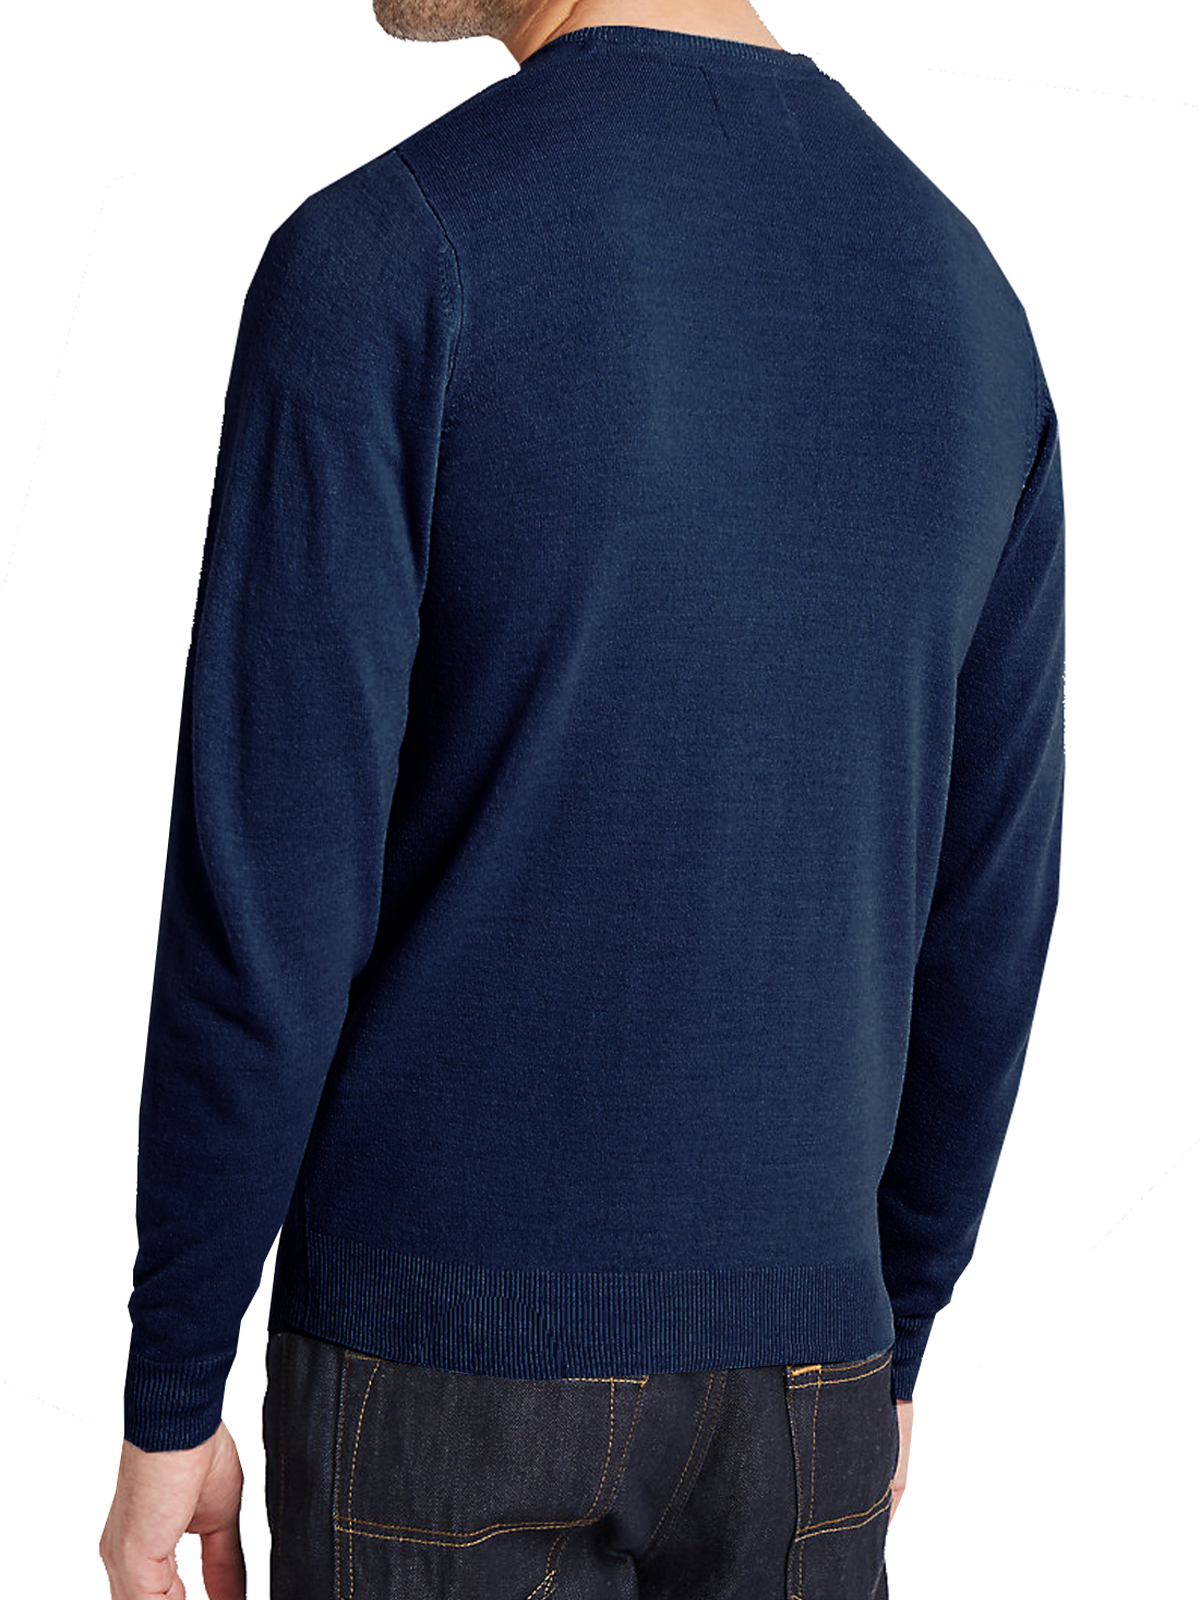 Marks and Spencer - - M&5 NAVY V-Neck Long Sleeve Knitted Jumper - Size ...